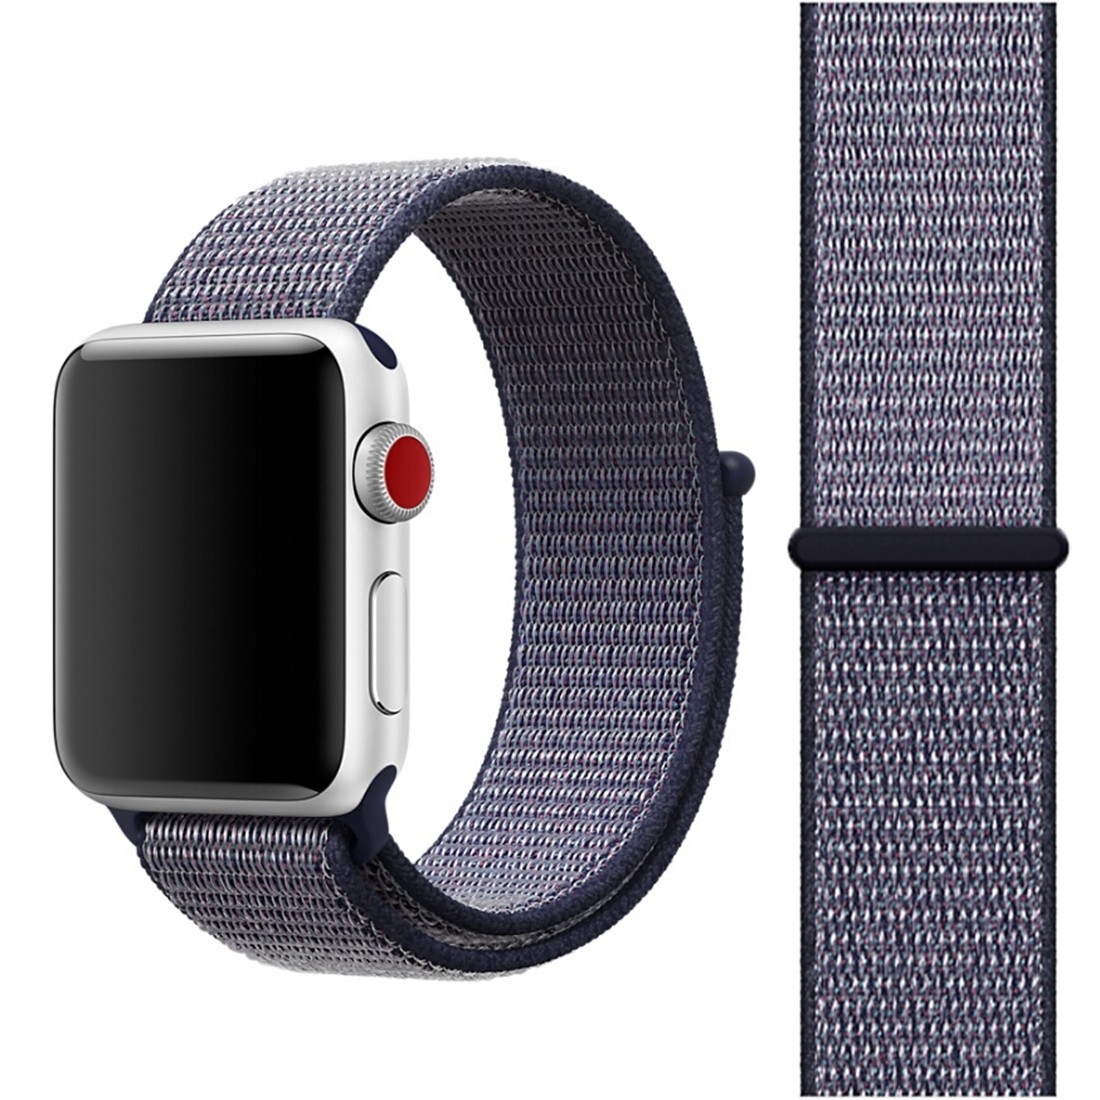 Ремешки для apple watch ultra 2. Ремешок для Apple watch Ultra. Ремешки для Эппл вотч. Ремешки на эпл вотч 44мм. Ремешок для Apple watch 44mm браслет.